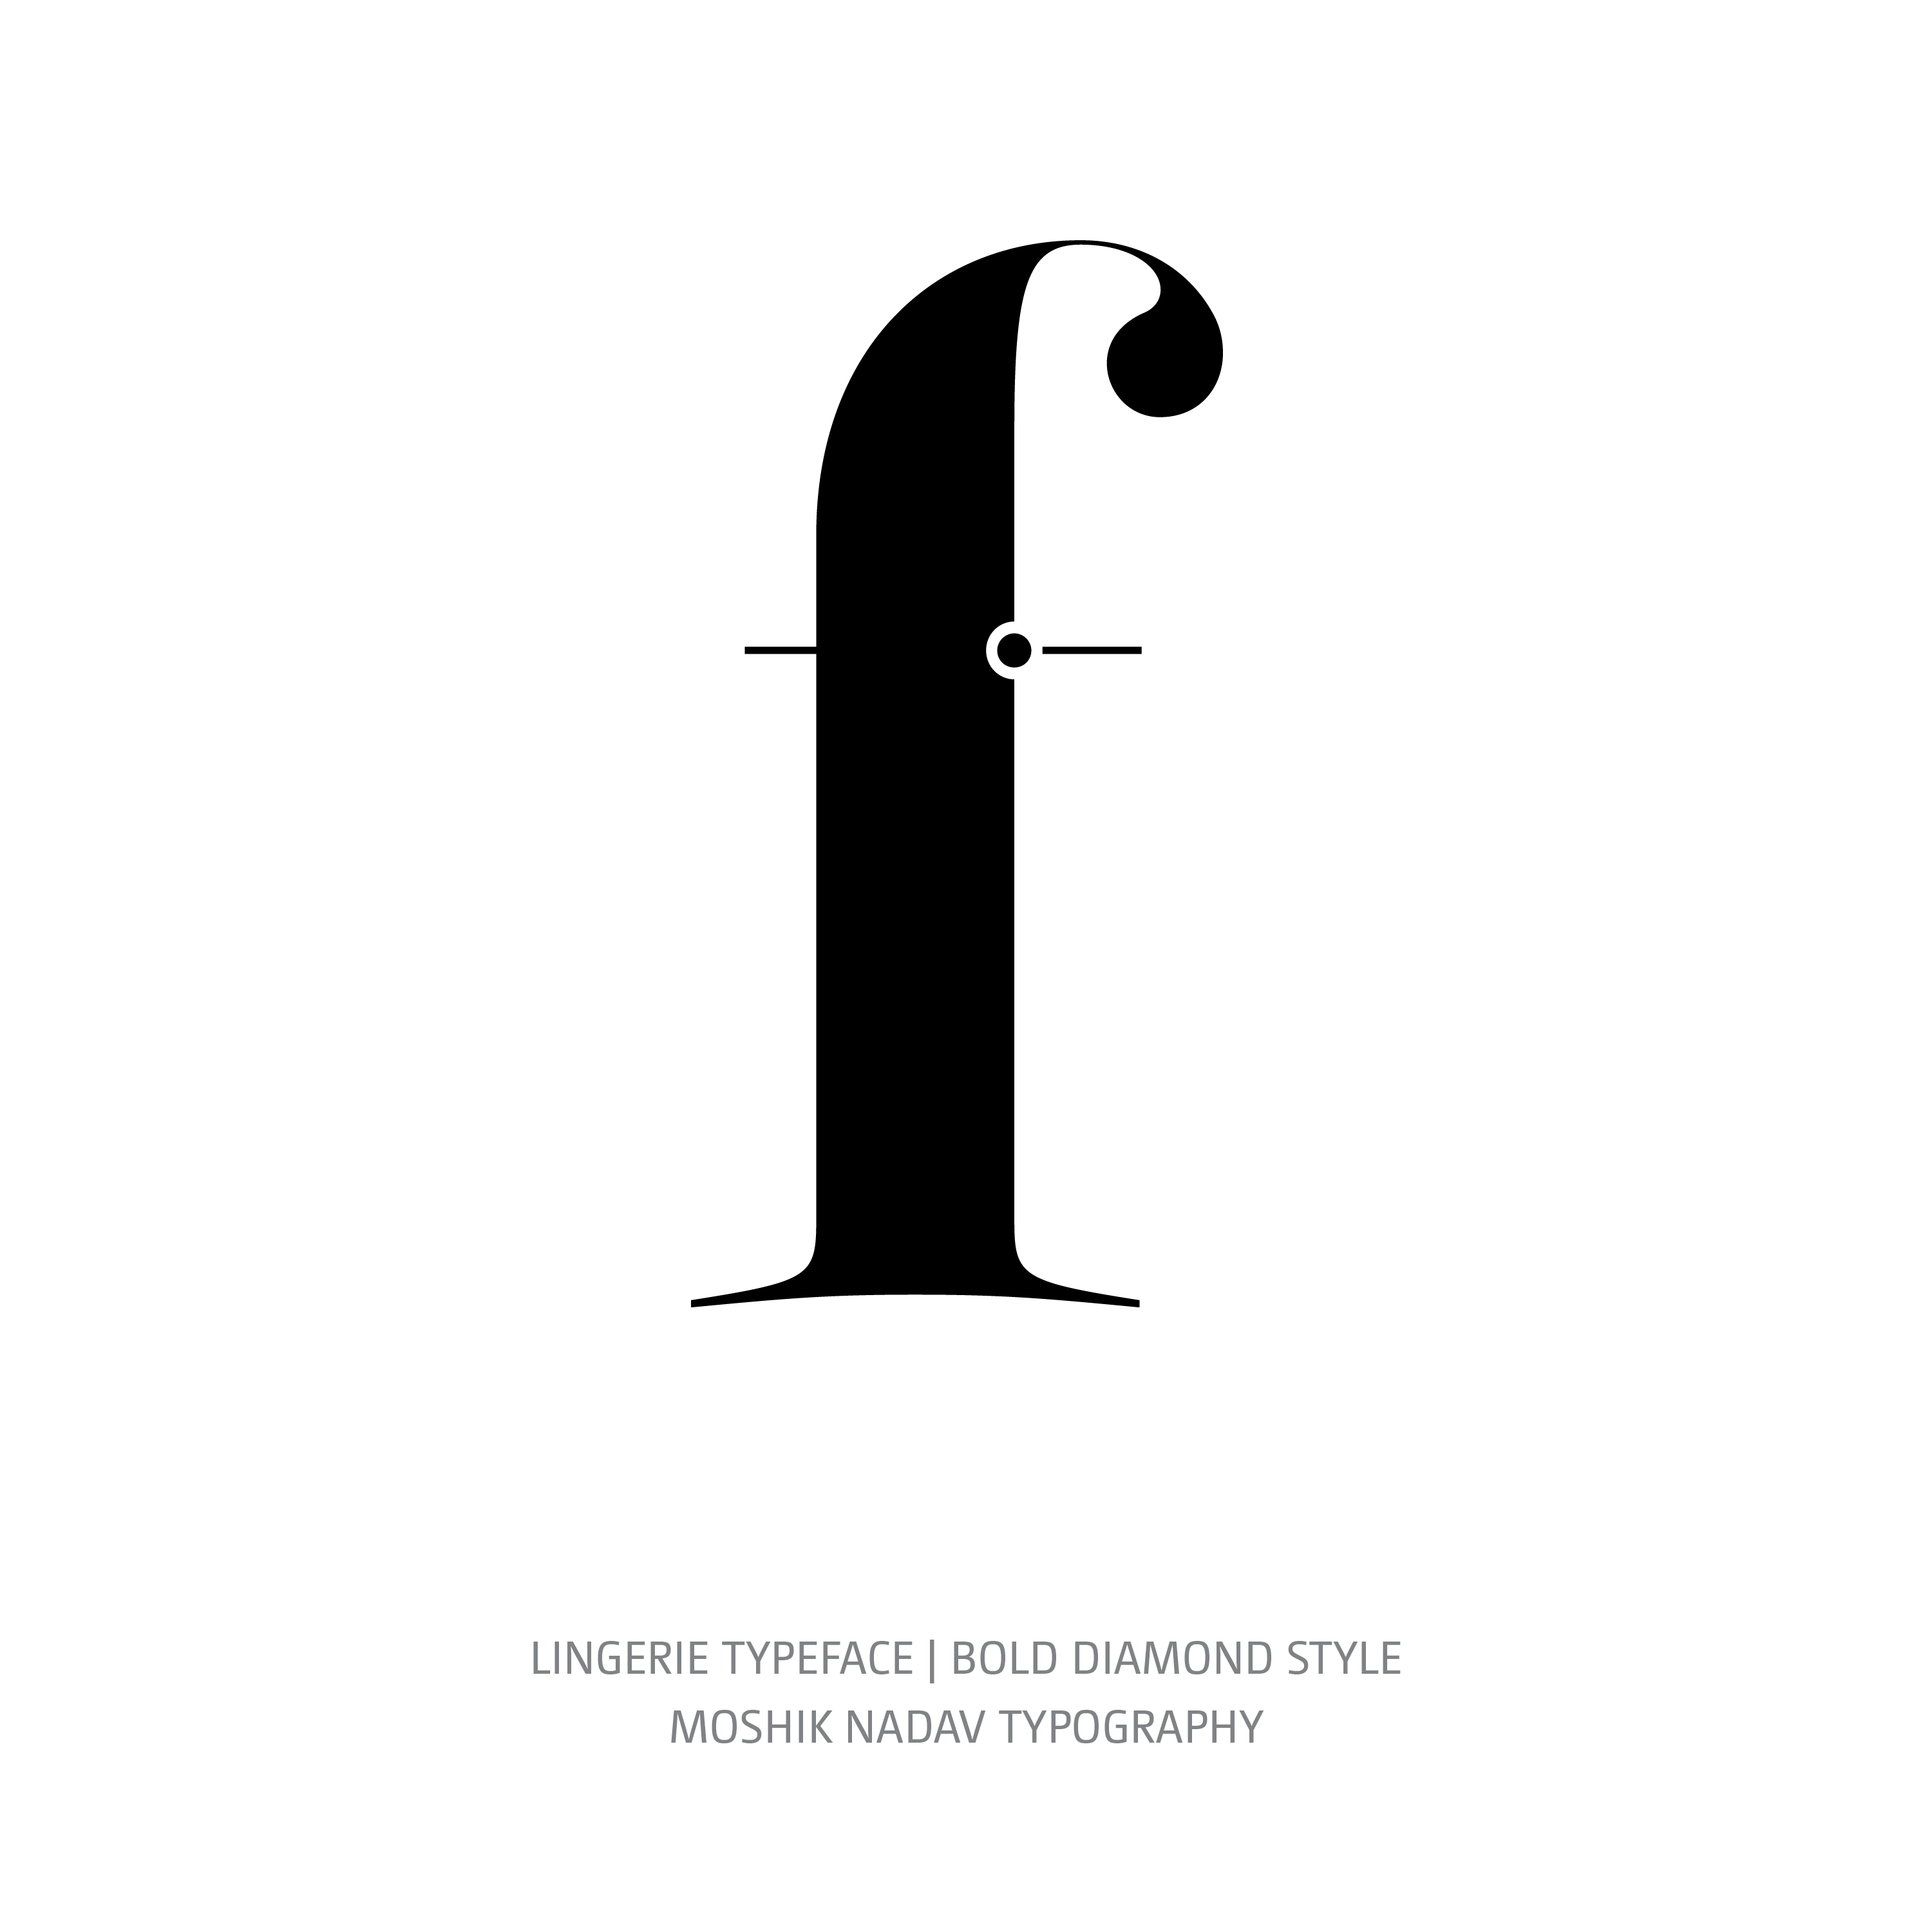 Lingerie Typeface Bold Diamond f